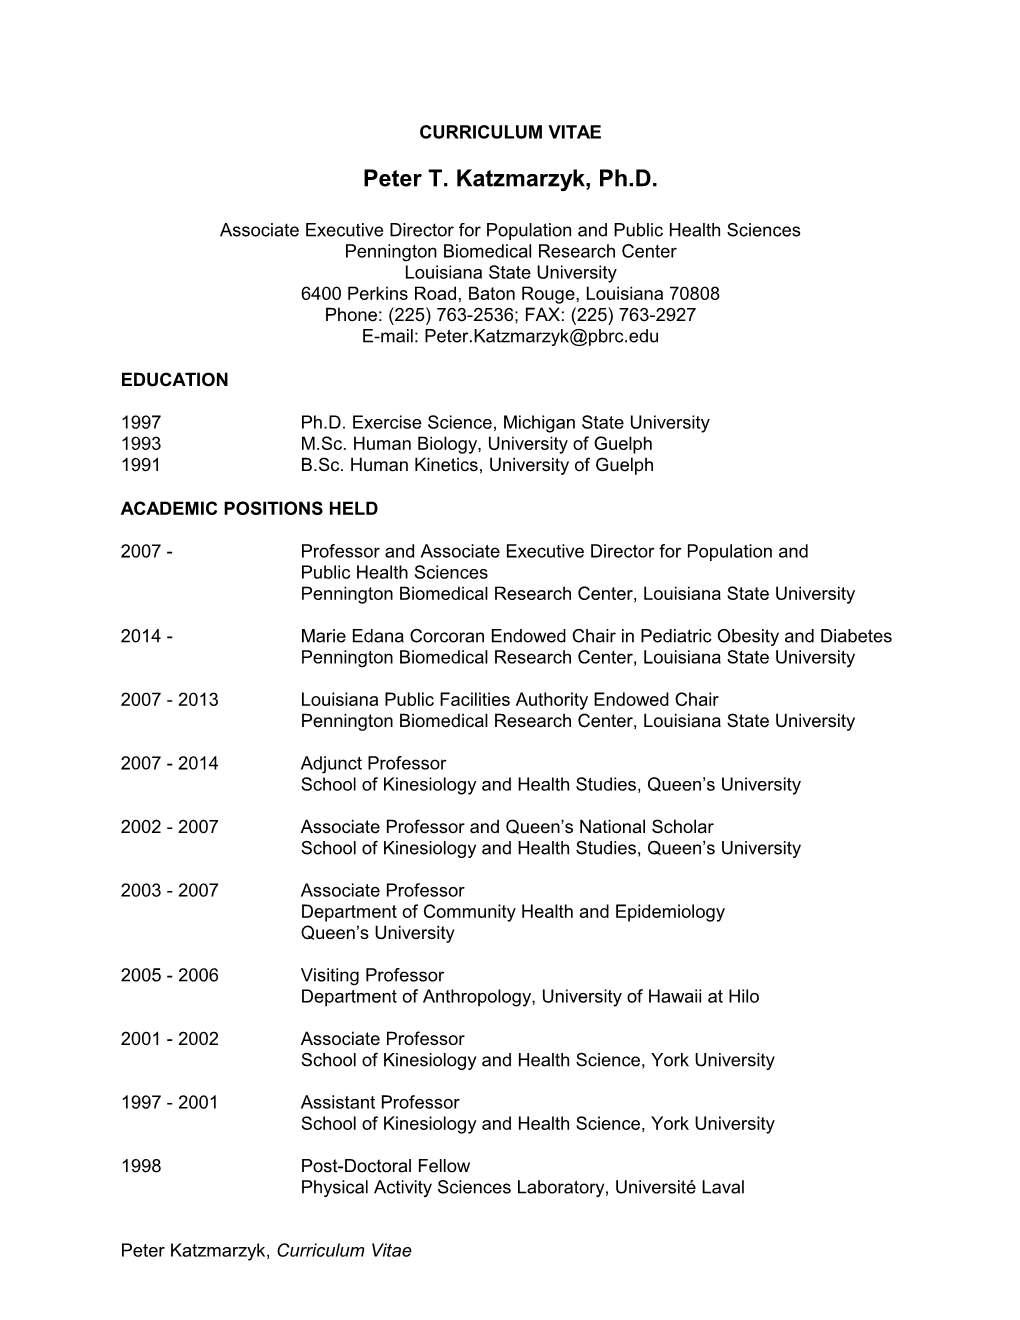 Peter Katzmarzyk's CV